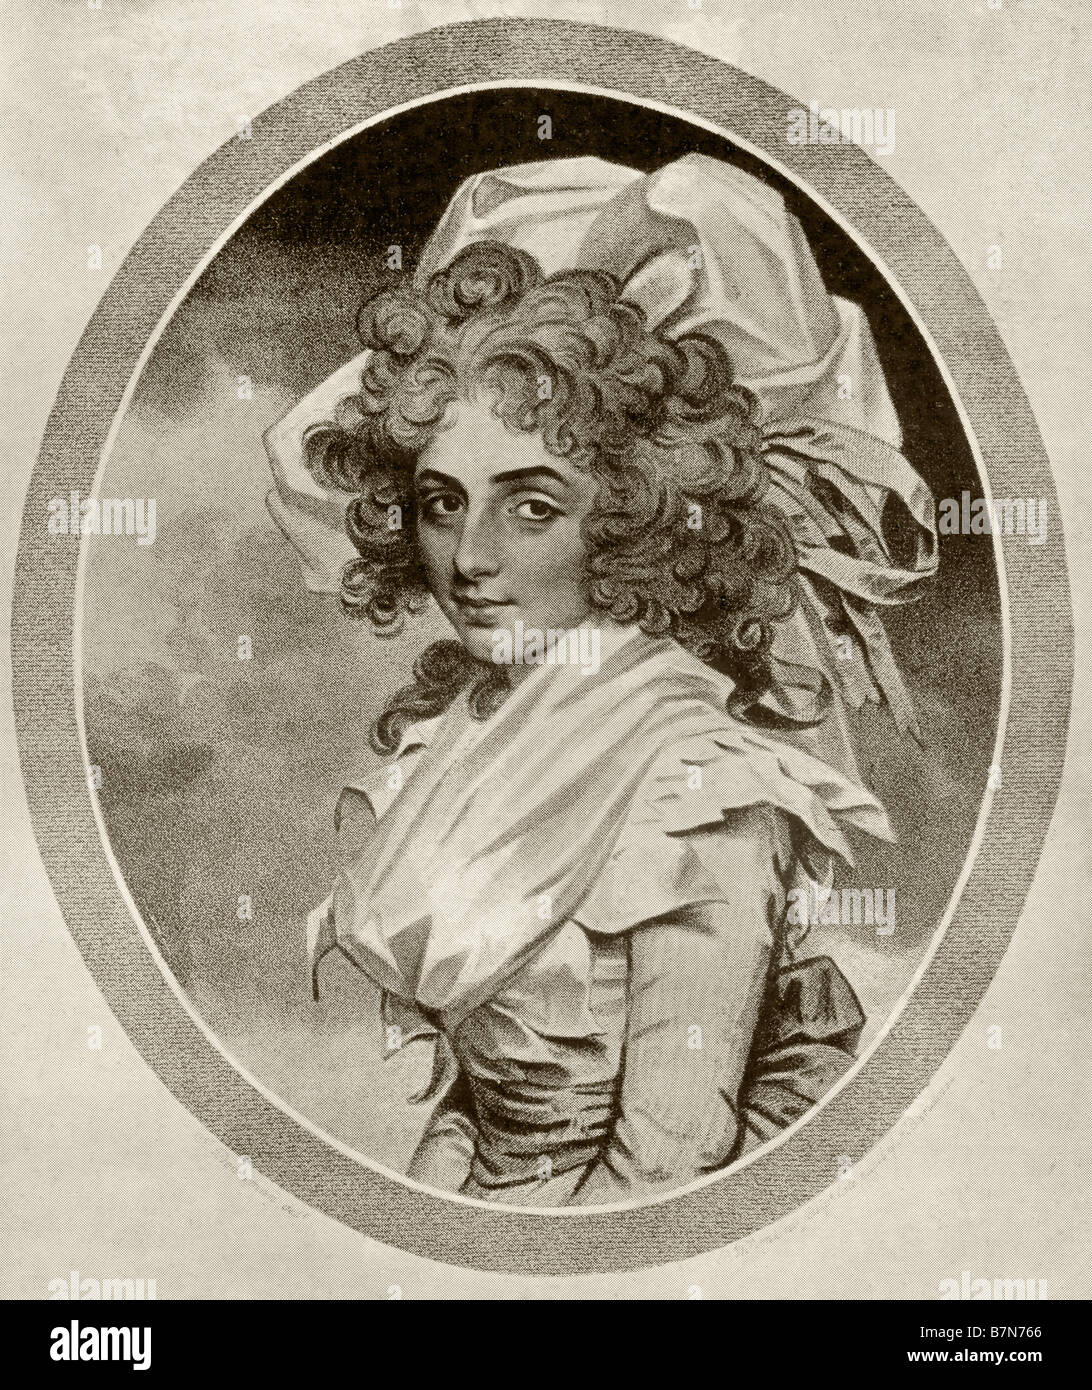 Sarah Siddons, ginocchio, 1755 - 1831. Attrice britannica. Foto Stock